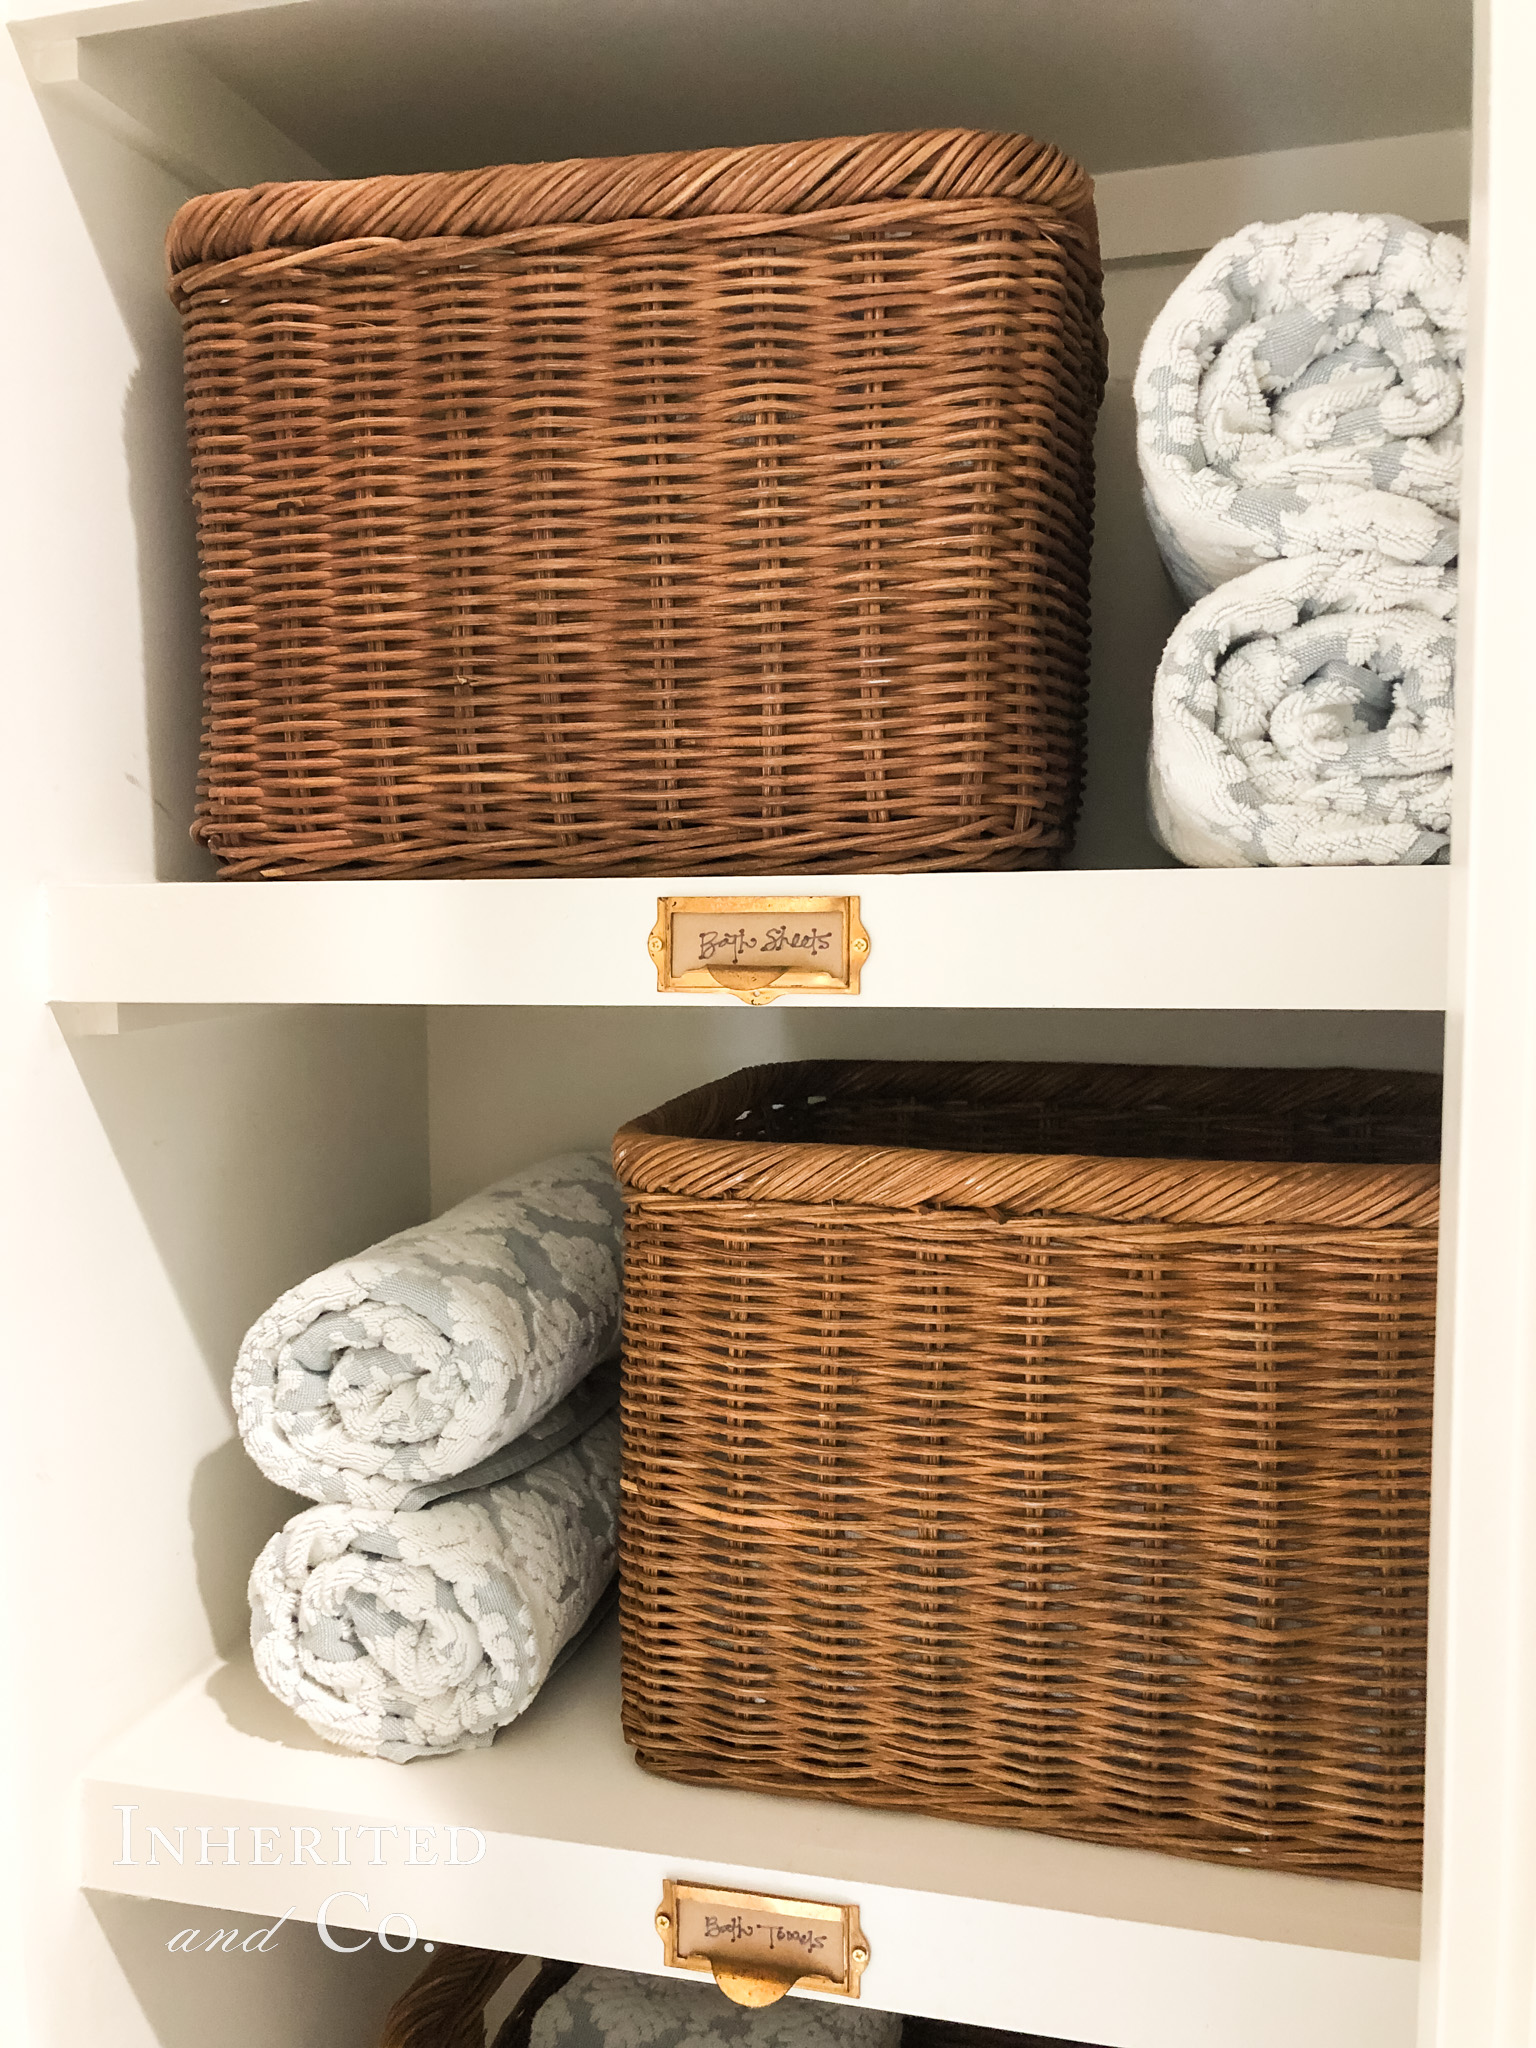 Rattan Baskets used to organize a Towel Closet